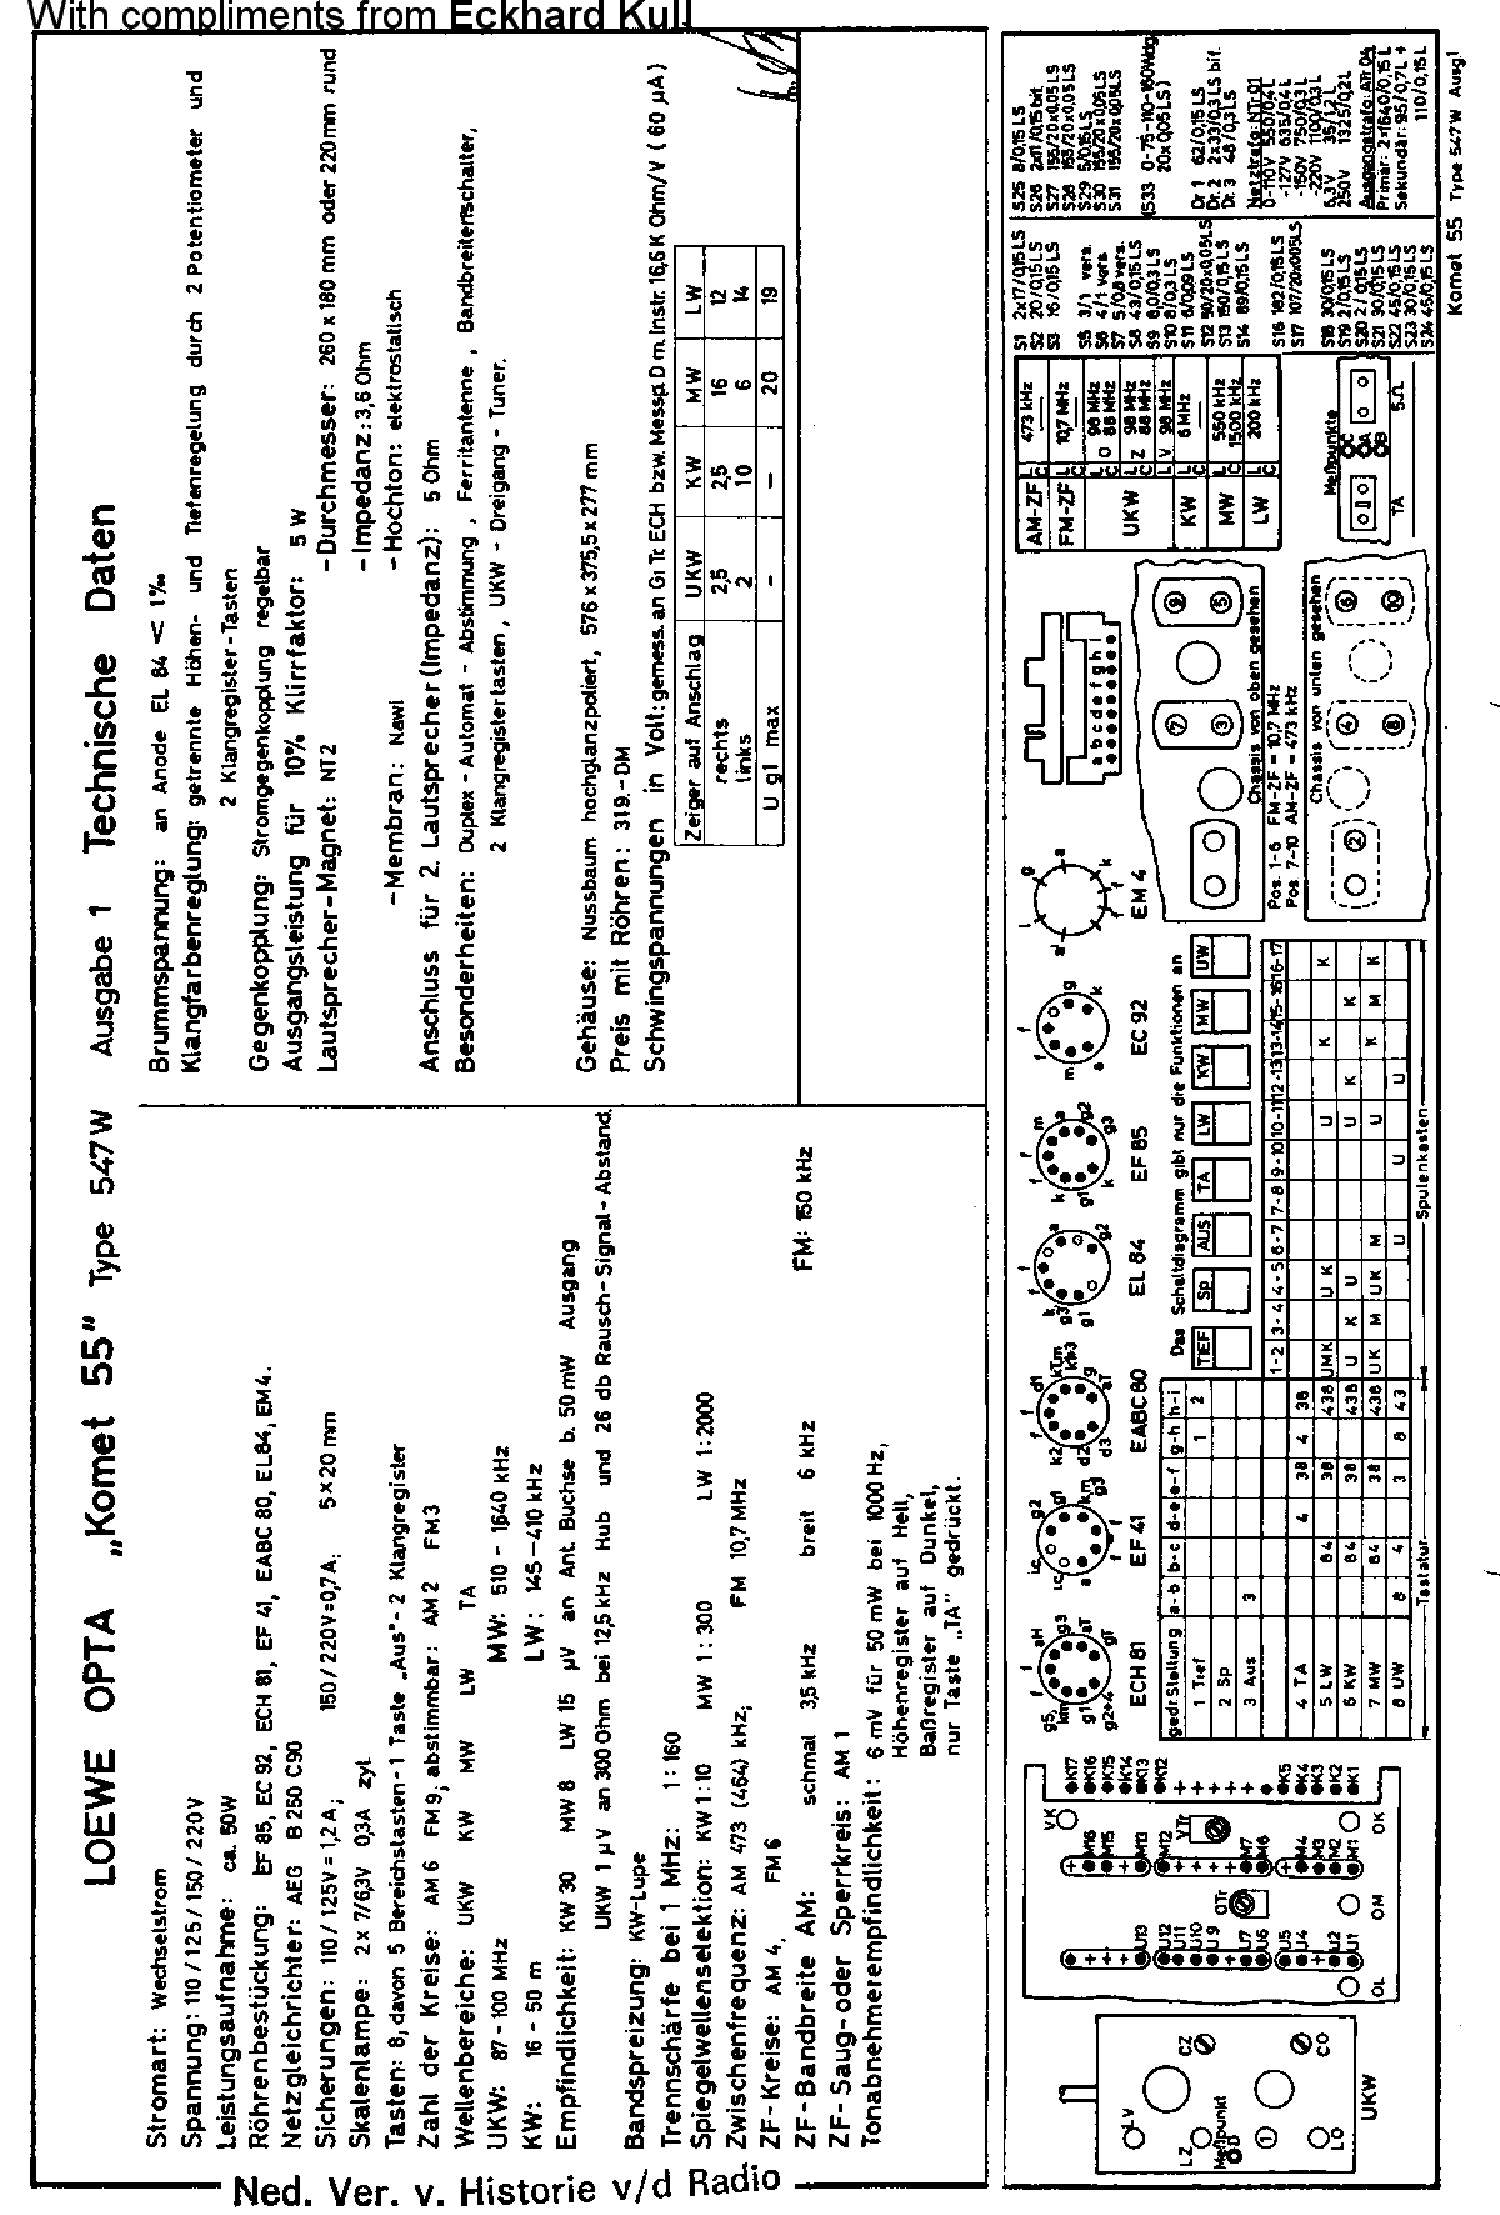 LOEWEOPTA 547W KOMET-55 AM-FM RECEIVER 1953 SM service manual (1st page)